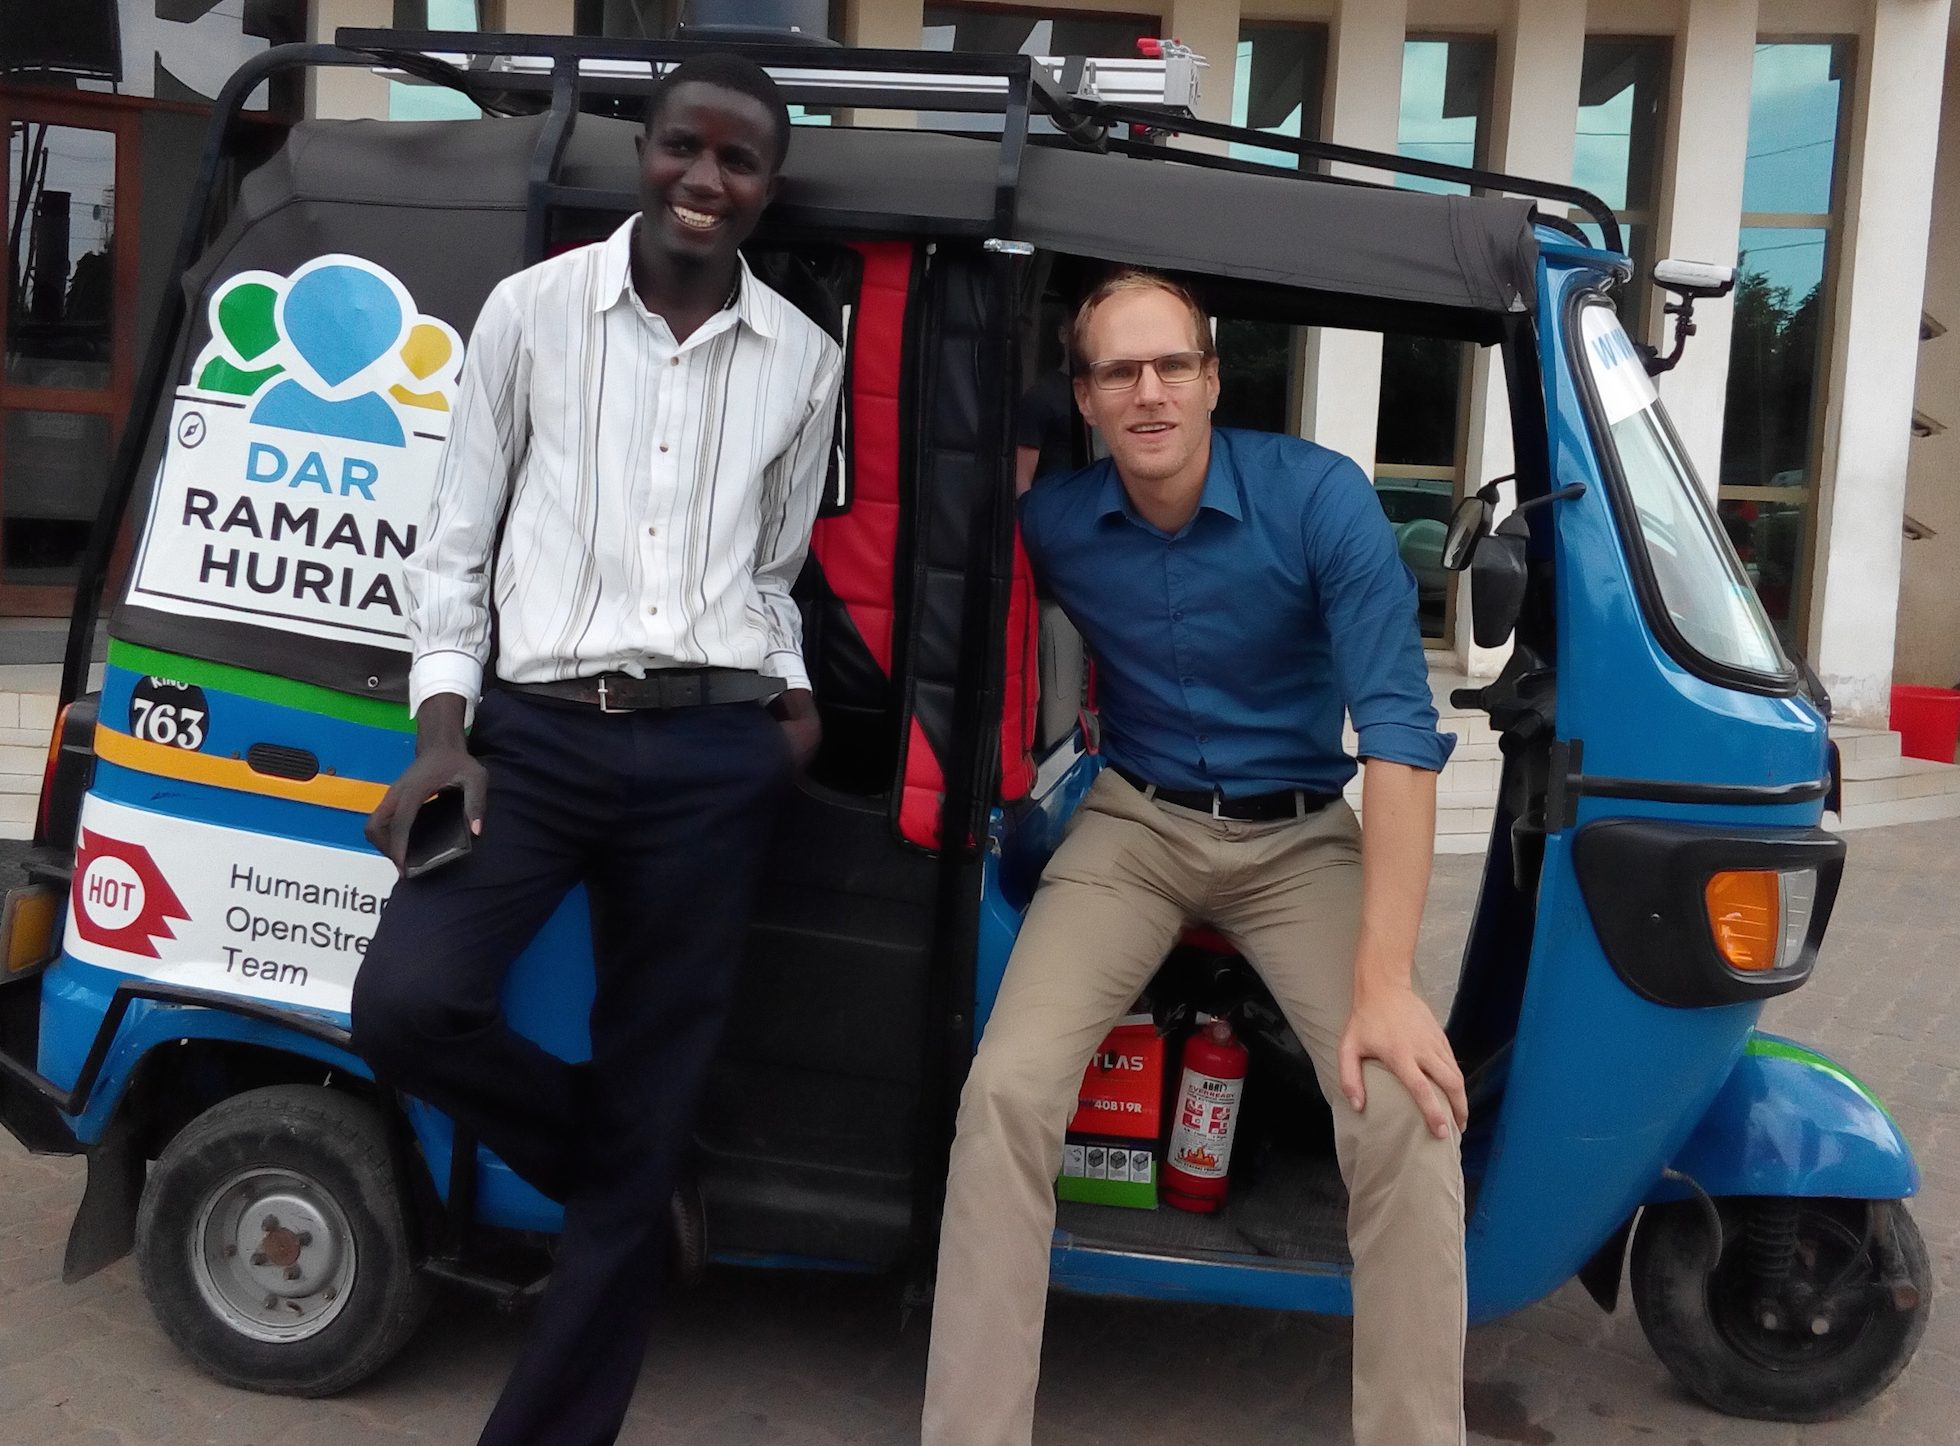 Map maker Paul Uithol (right) in Dar es Salaam, Tanzania